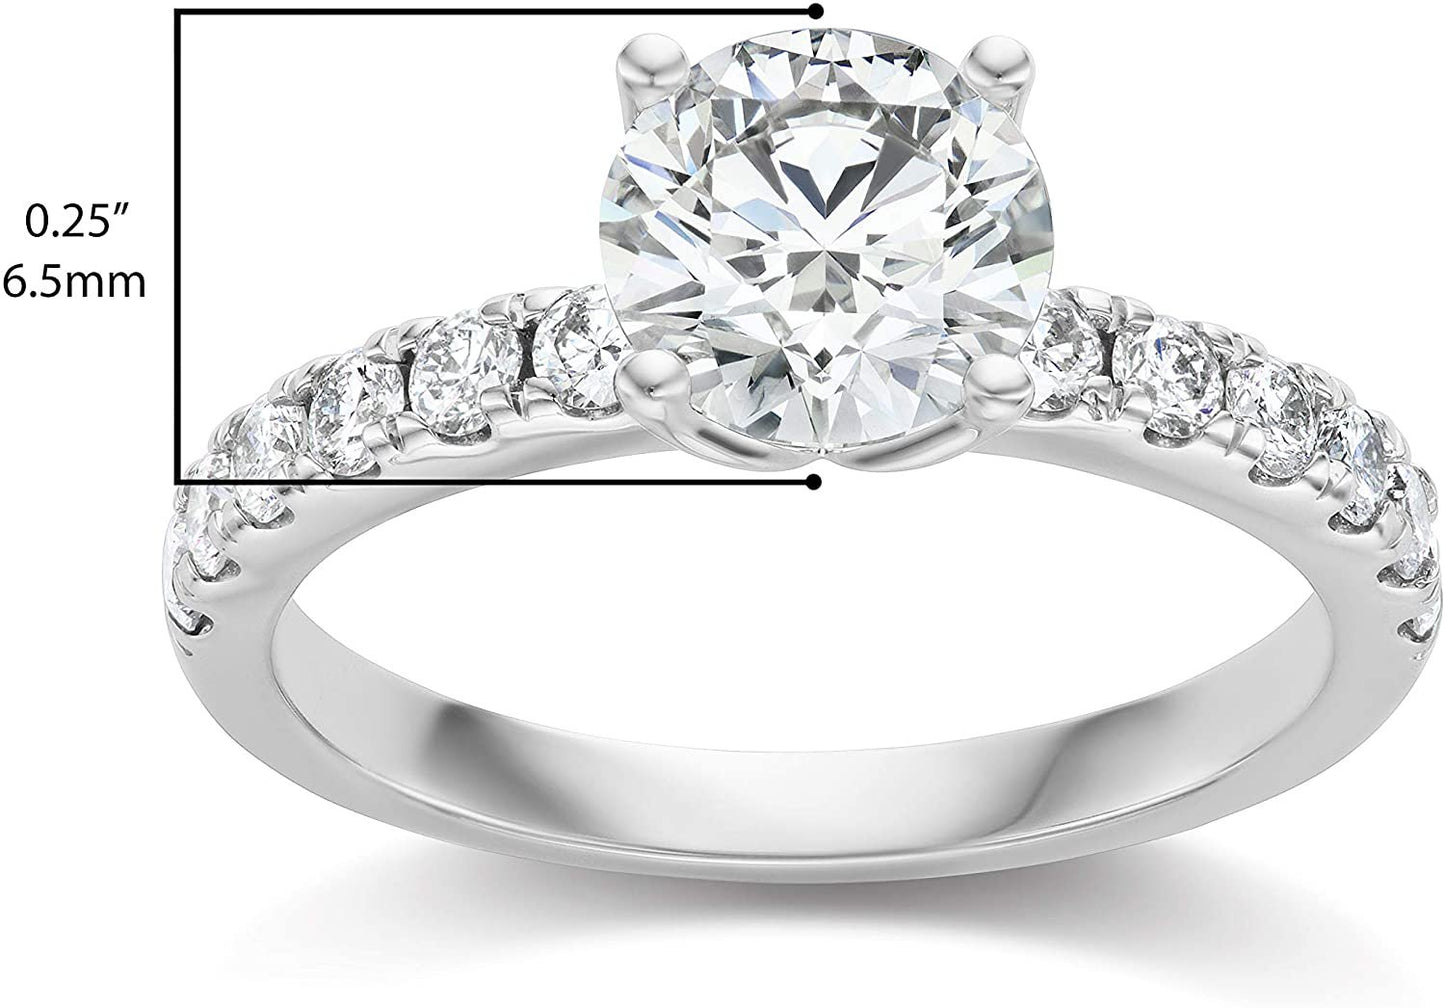 IGI Certified 14K White Gold 1-1/4 Cttw Brilliant-Cut Colorless Lab Created Diamond Solitaire Engagement Ring with Pavé-Set Band (Center Stone: E-F Color, VVS1-VVS2 Clarity) - Size 7.25